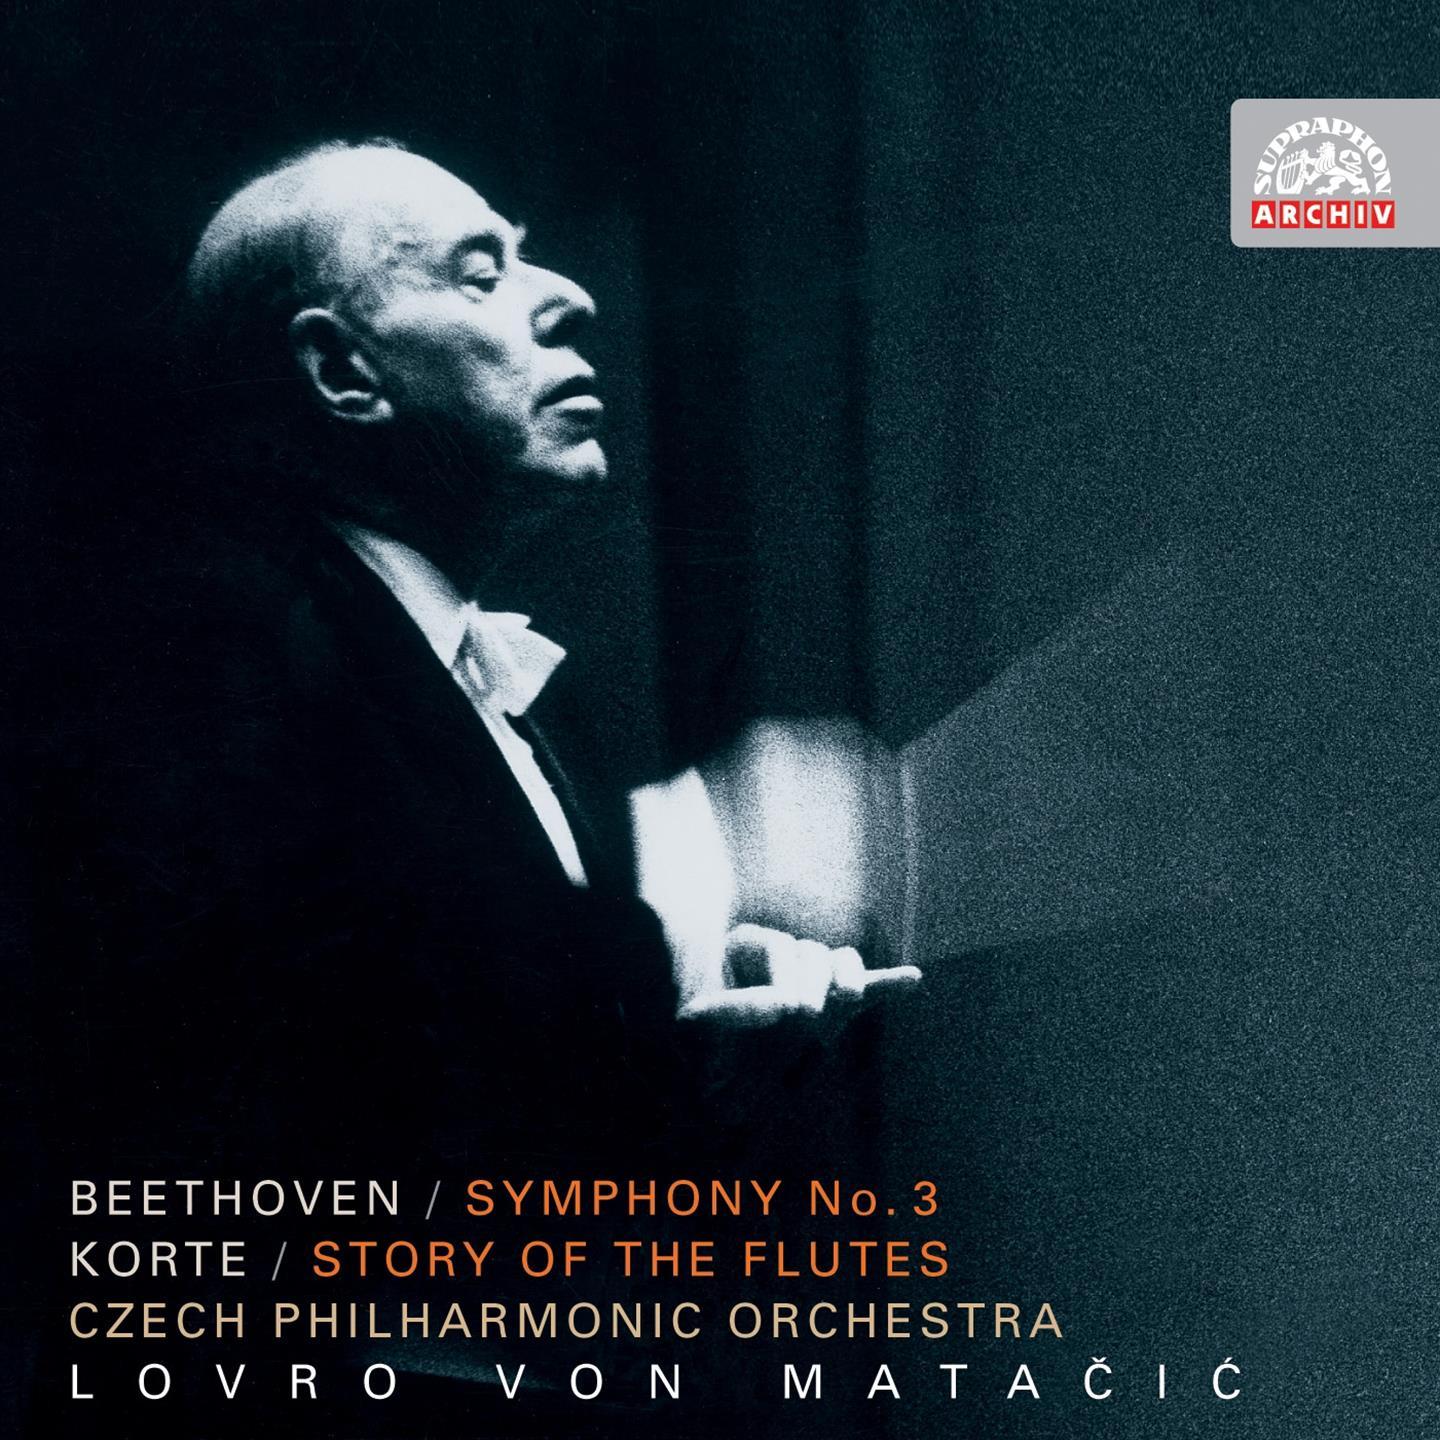 Beethoven: Symphony No. 3 " Eroica"  Korte: Flute s Story